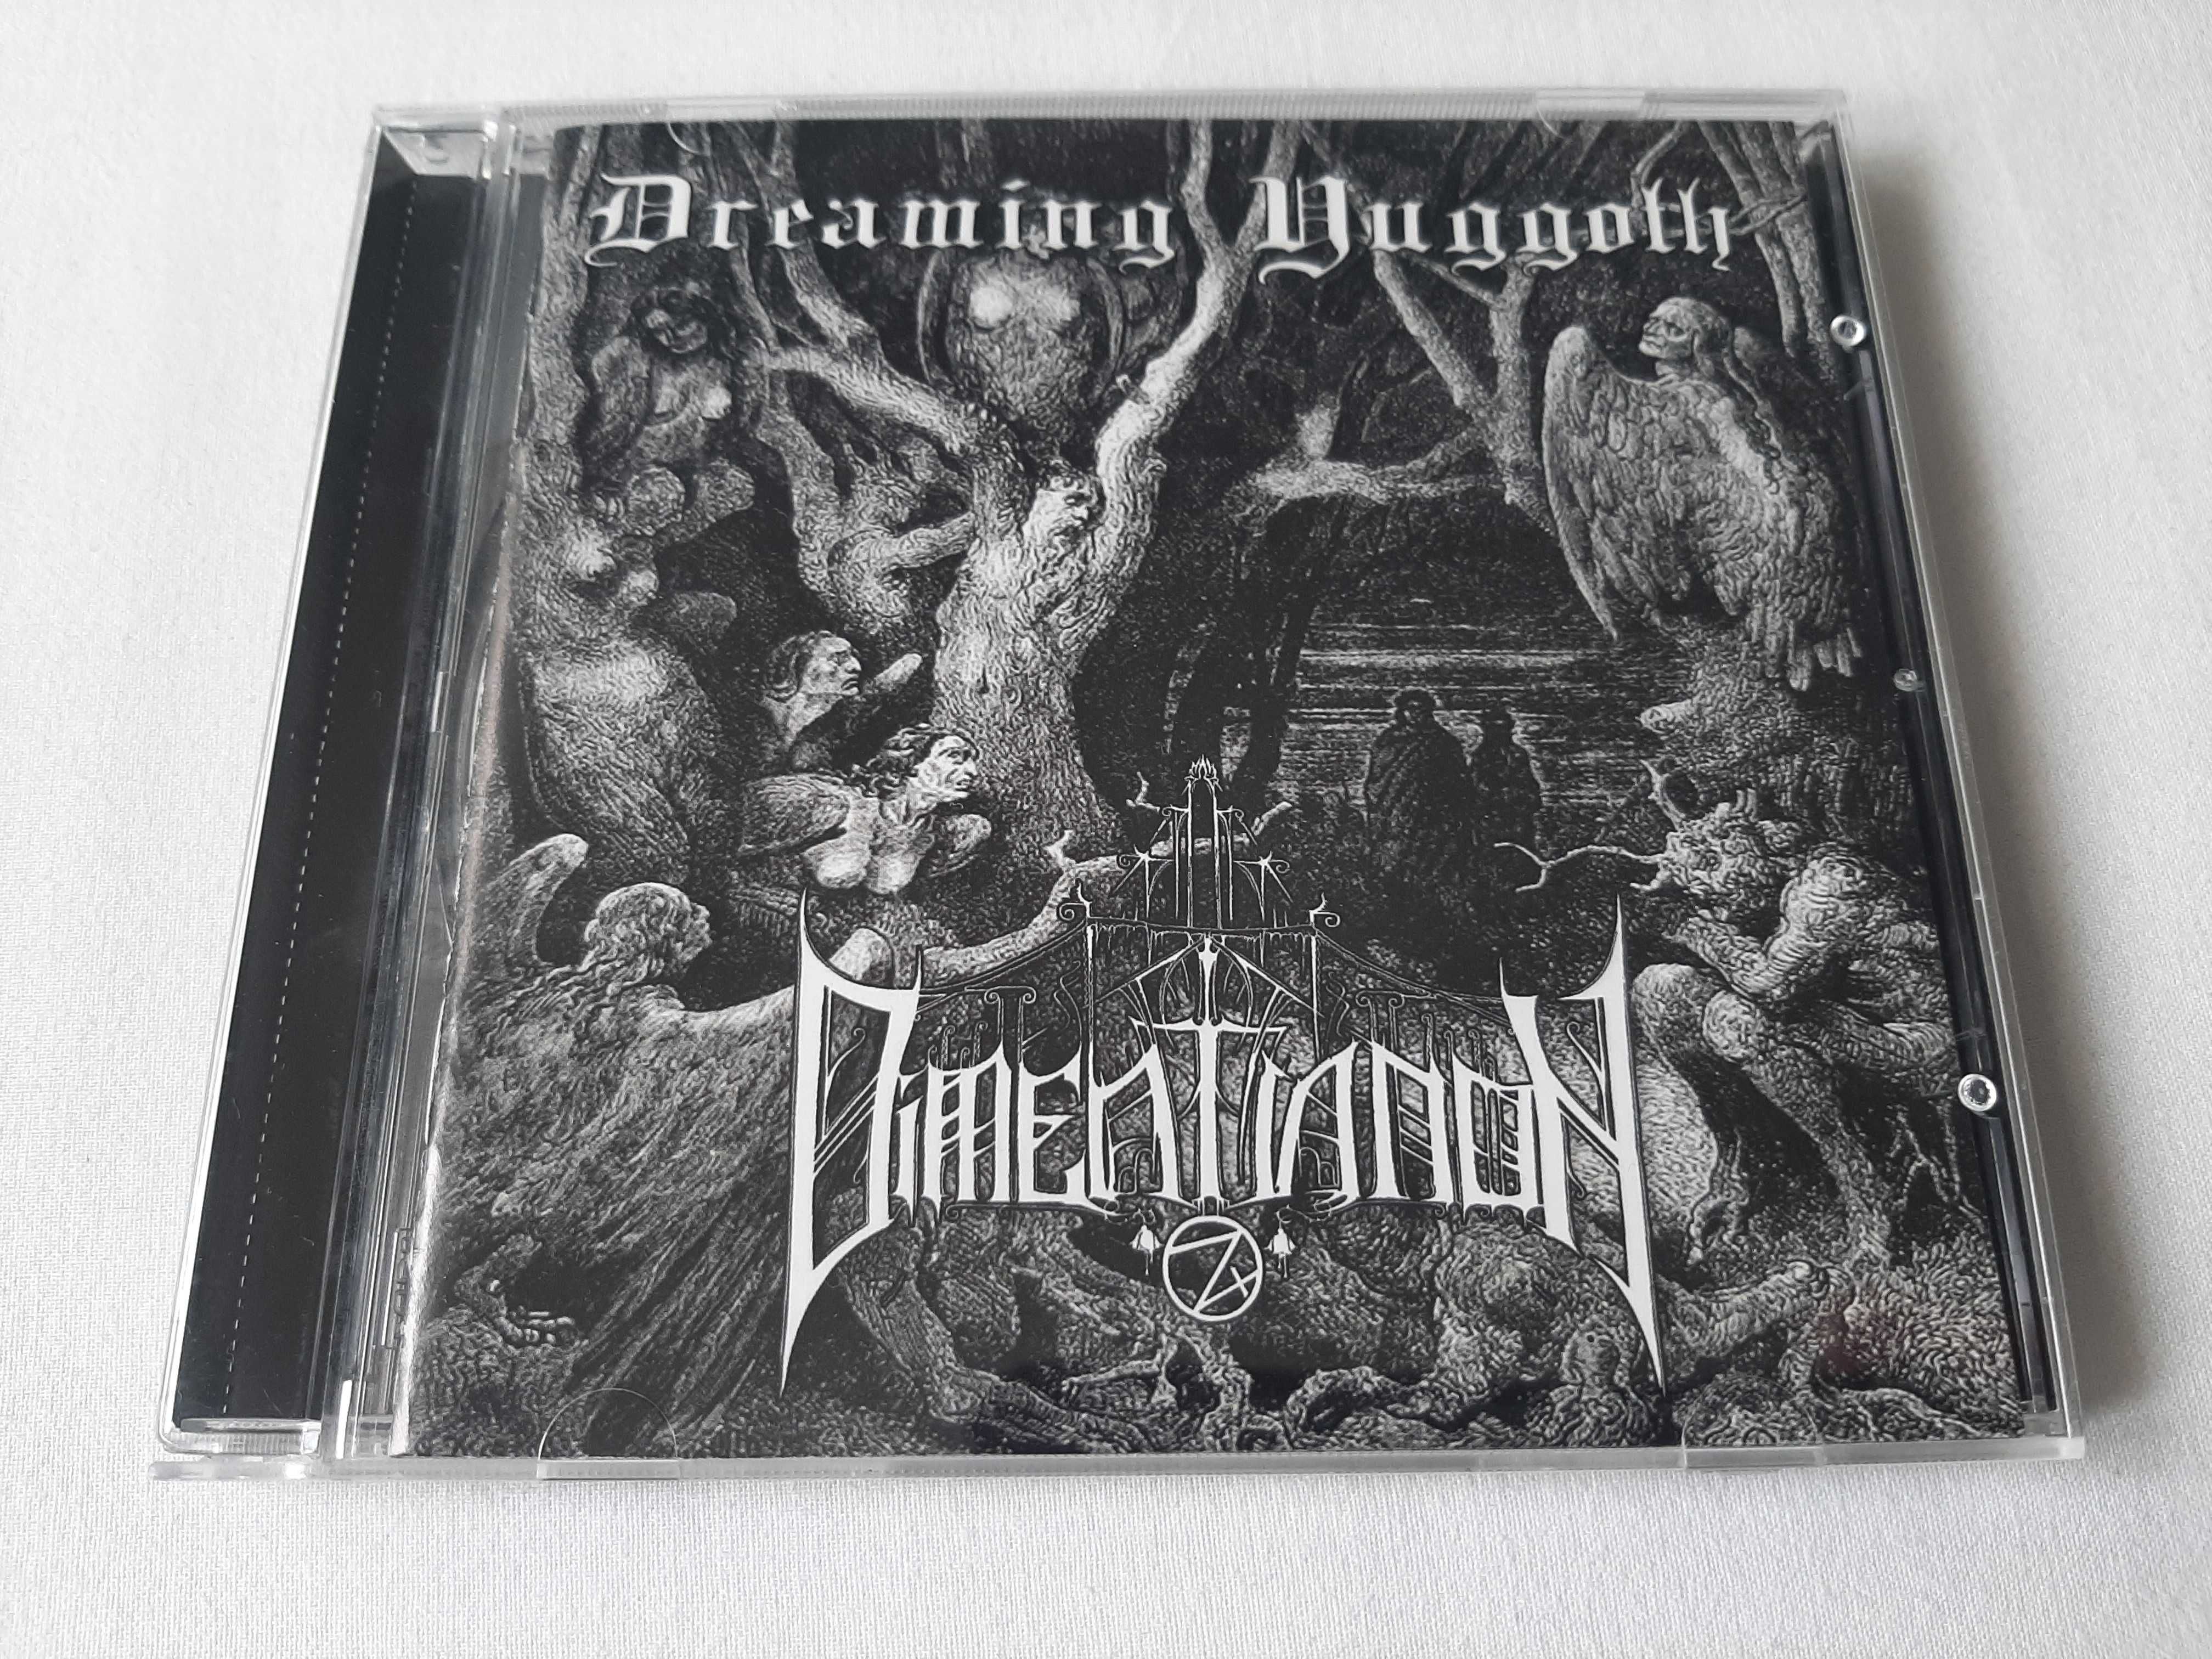 DIMENTIANON "Dreaming Yuggoth" CD 2021 death/black/doom metal